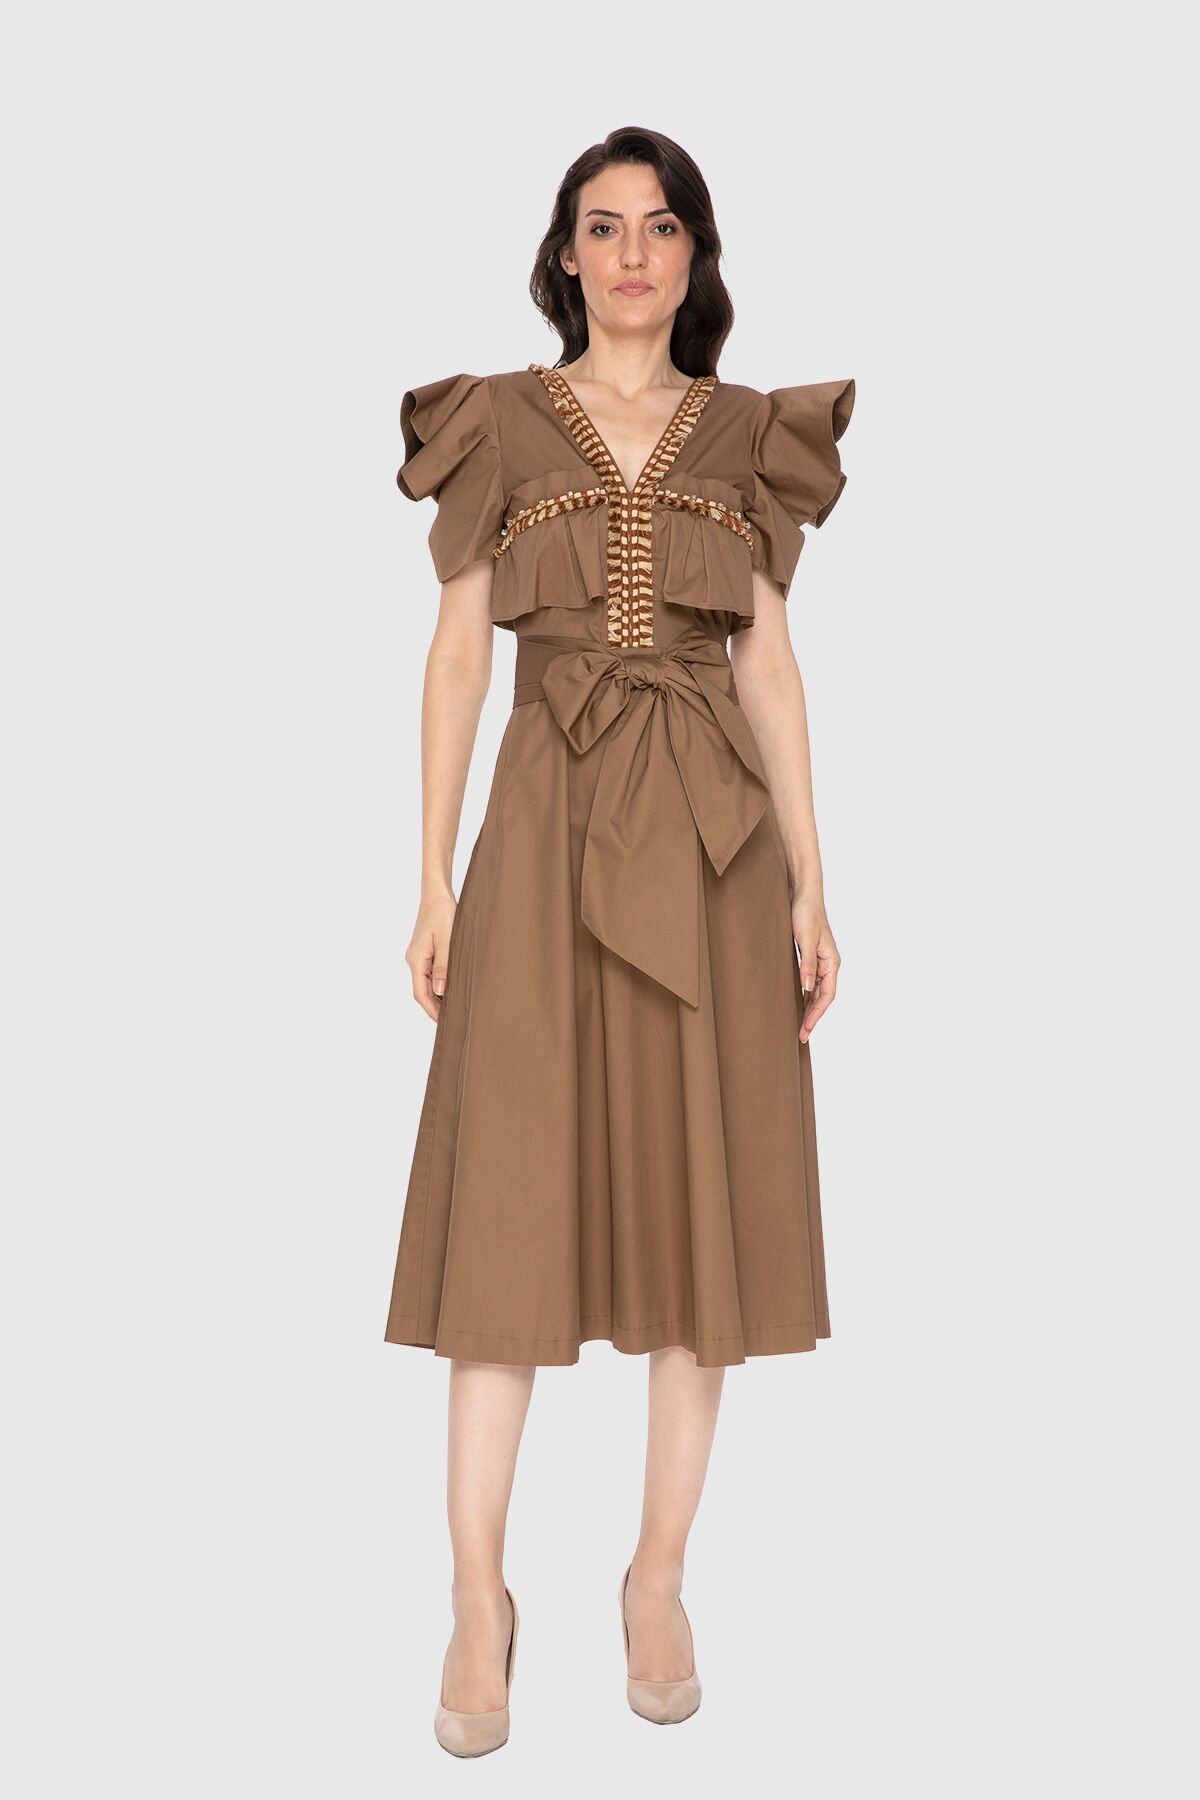 Stripe And Tassel Detail Embroidered Poplin Midi Length Brown Dress